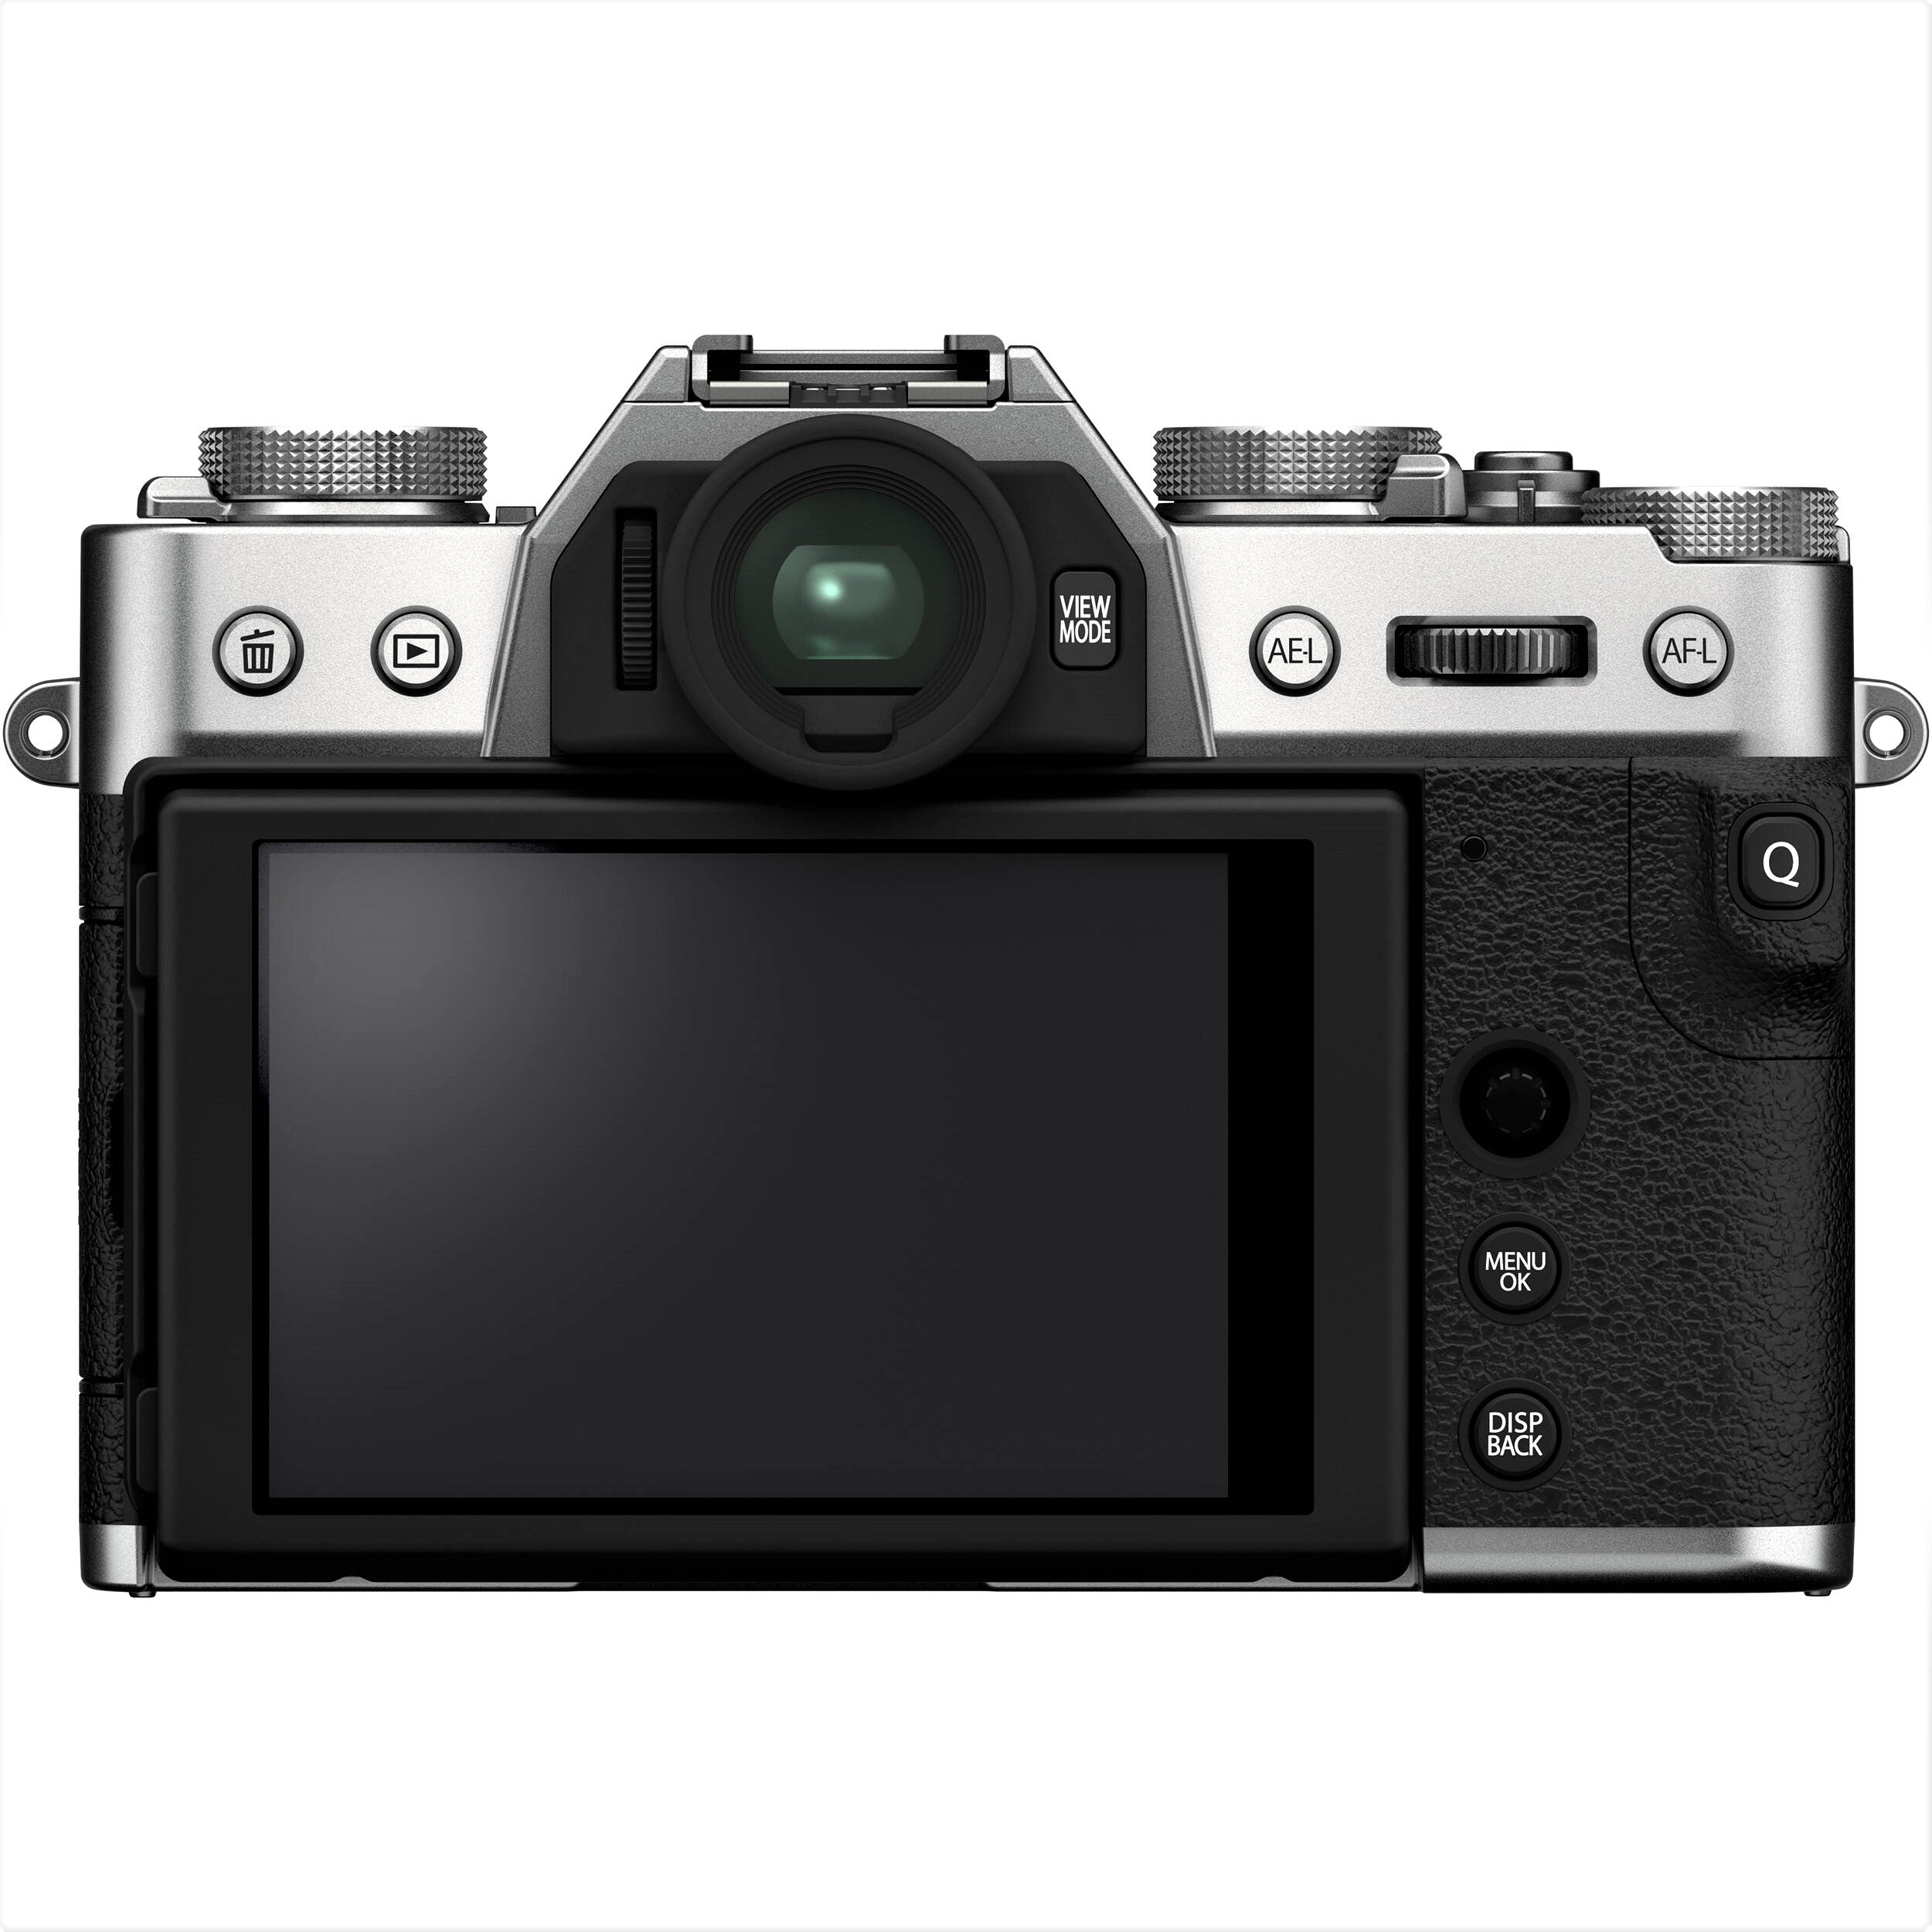 Fujifilm X-T30 II Mirrorless Camera with XC 15-45mm OIS PZ Lens (Black